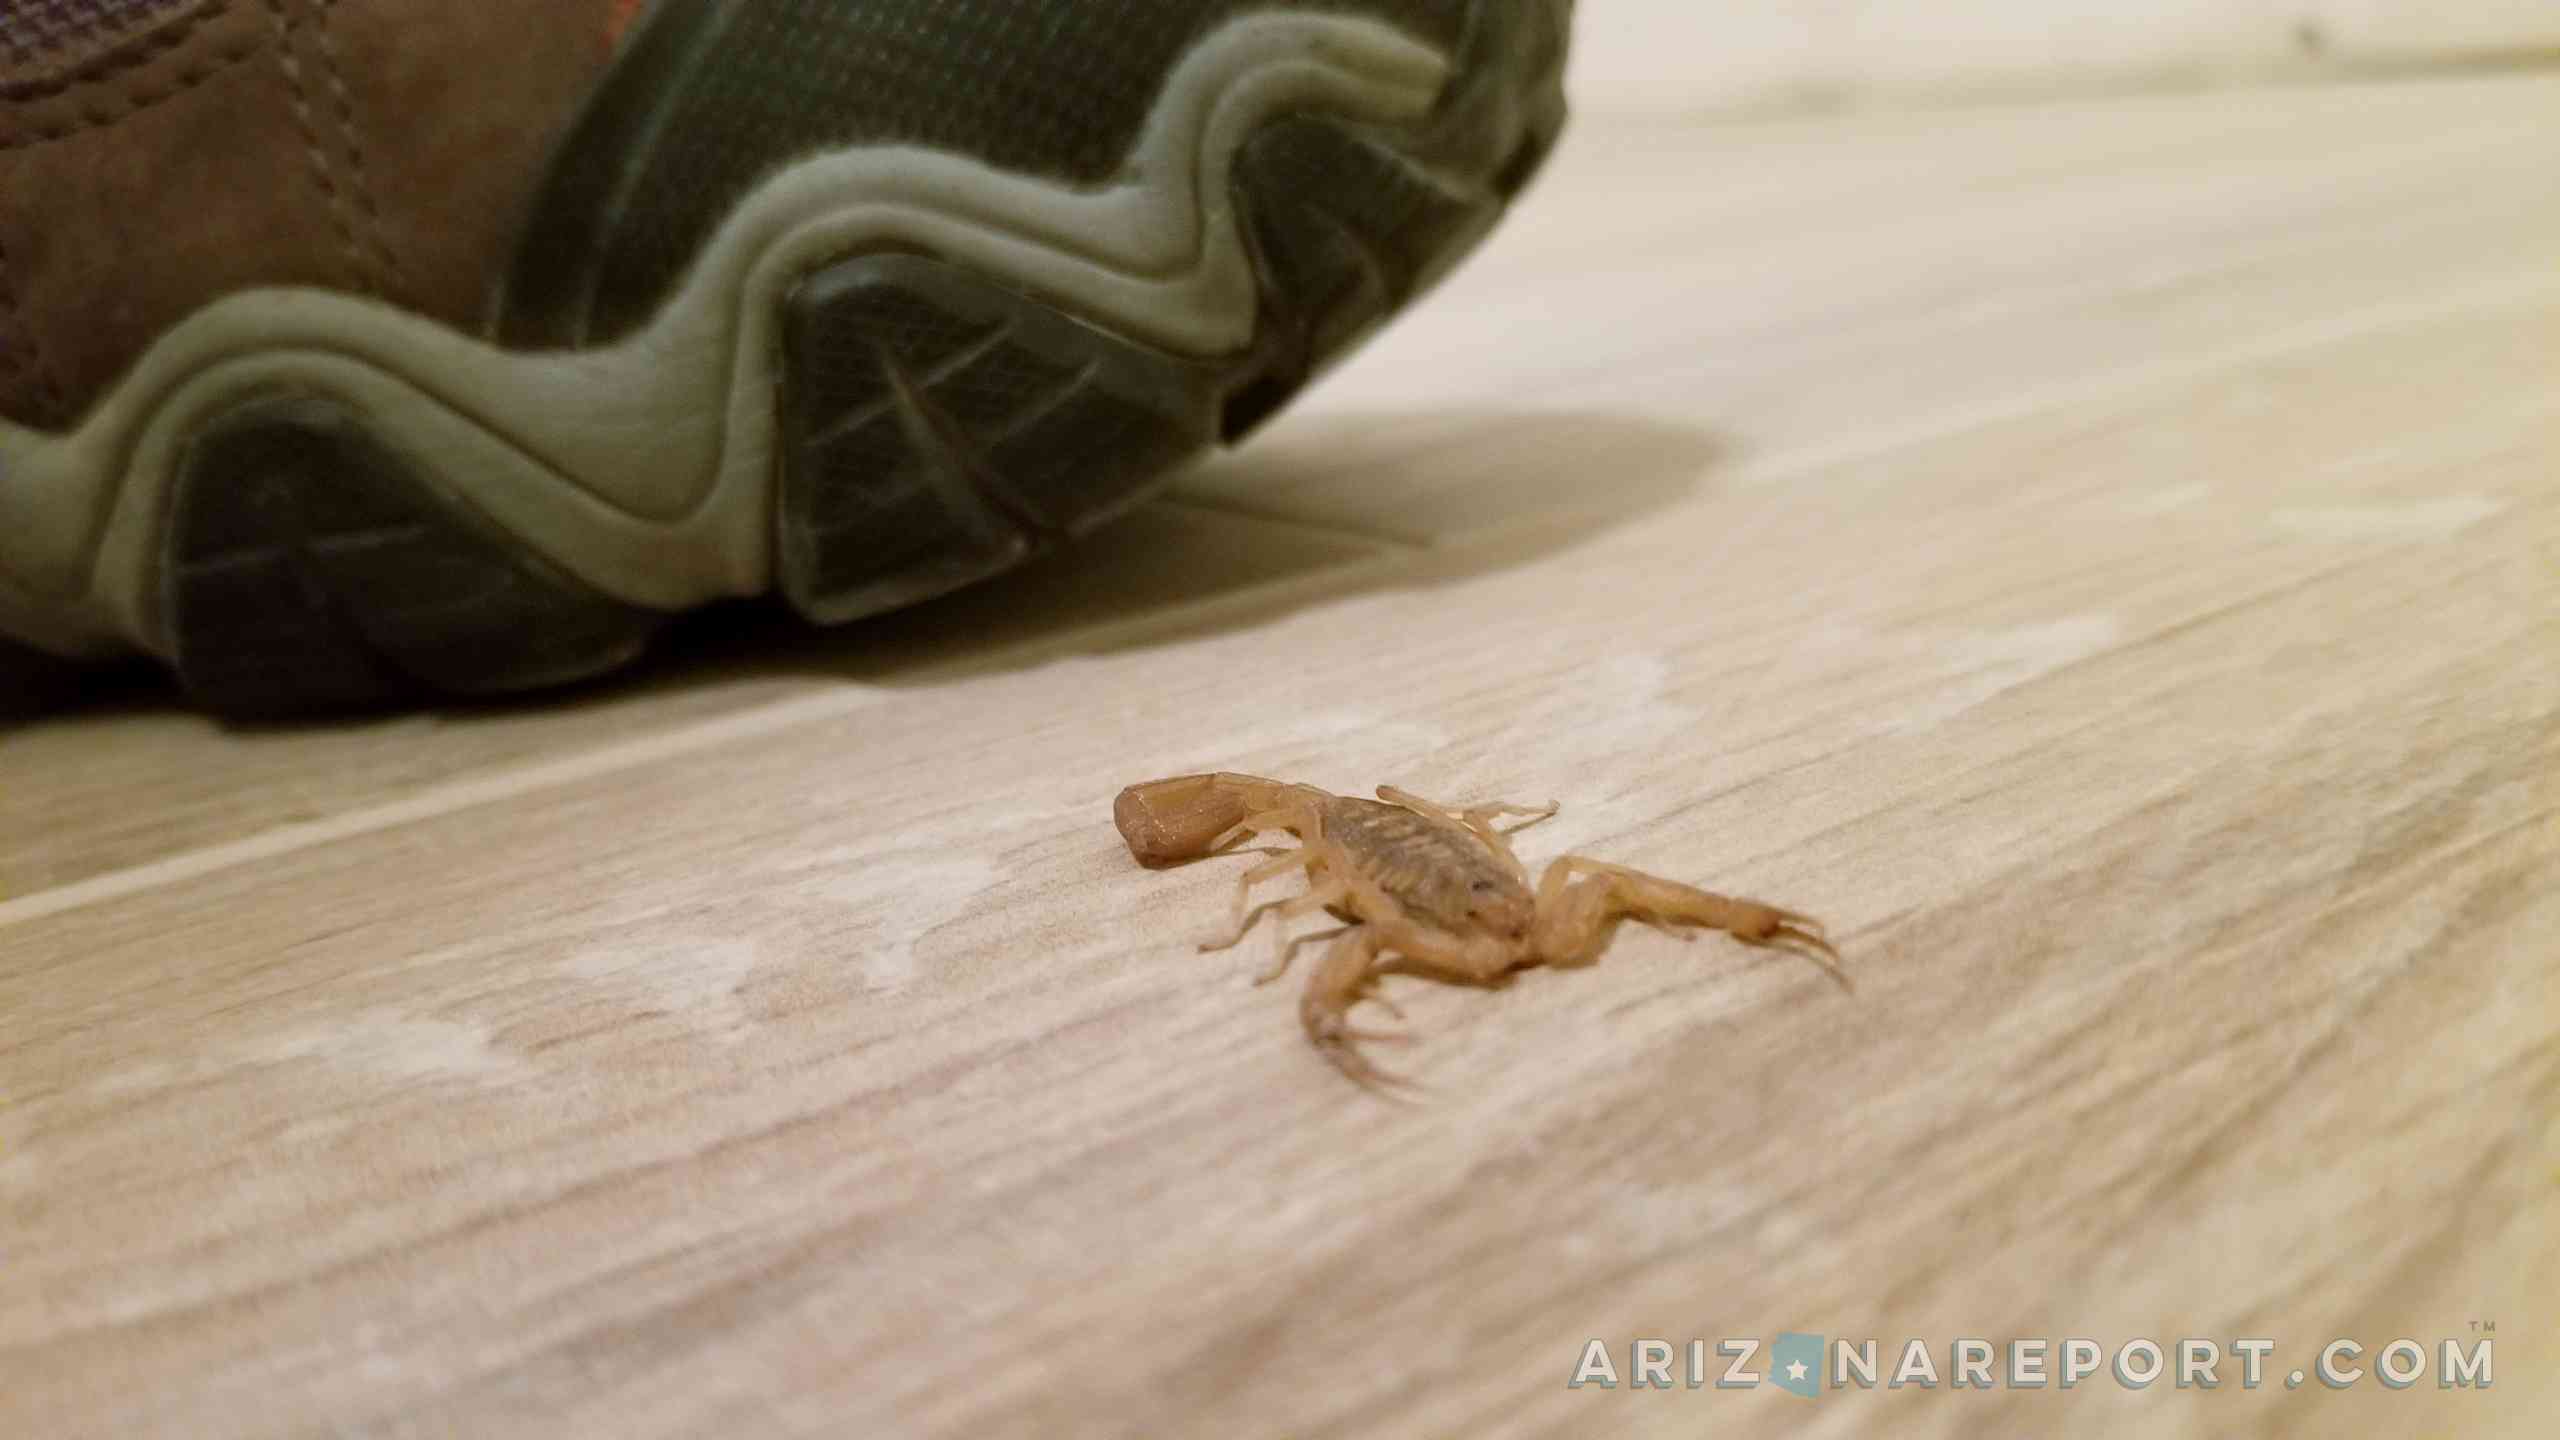 Arizona bark scorpion floor tile shoe indoors exterminate